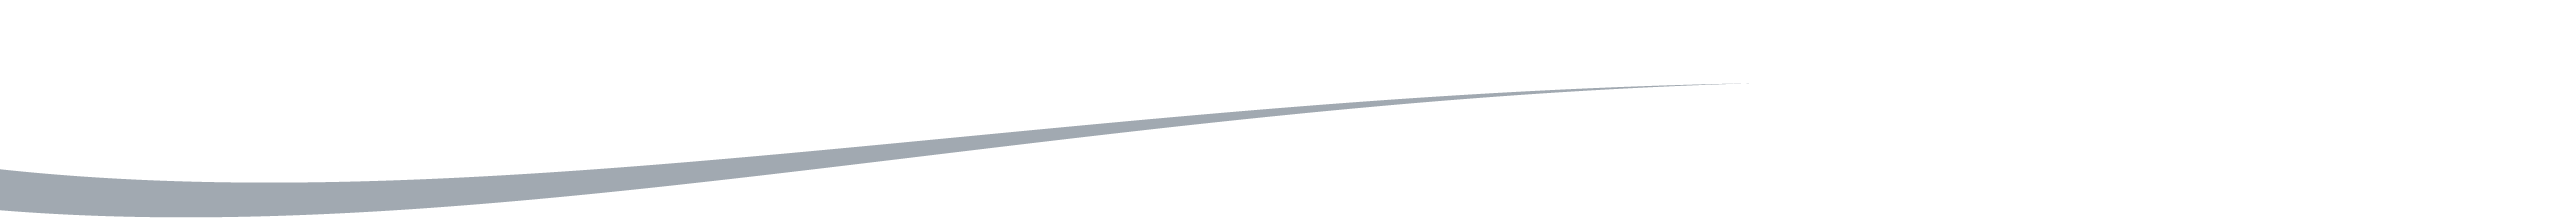 banner curve